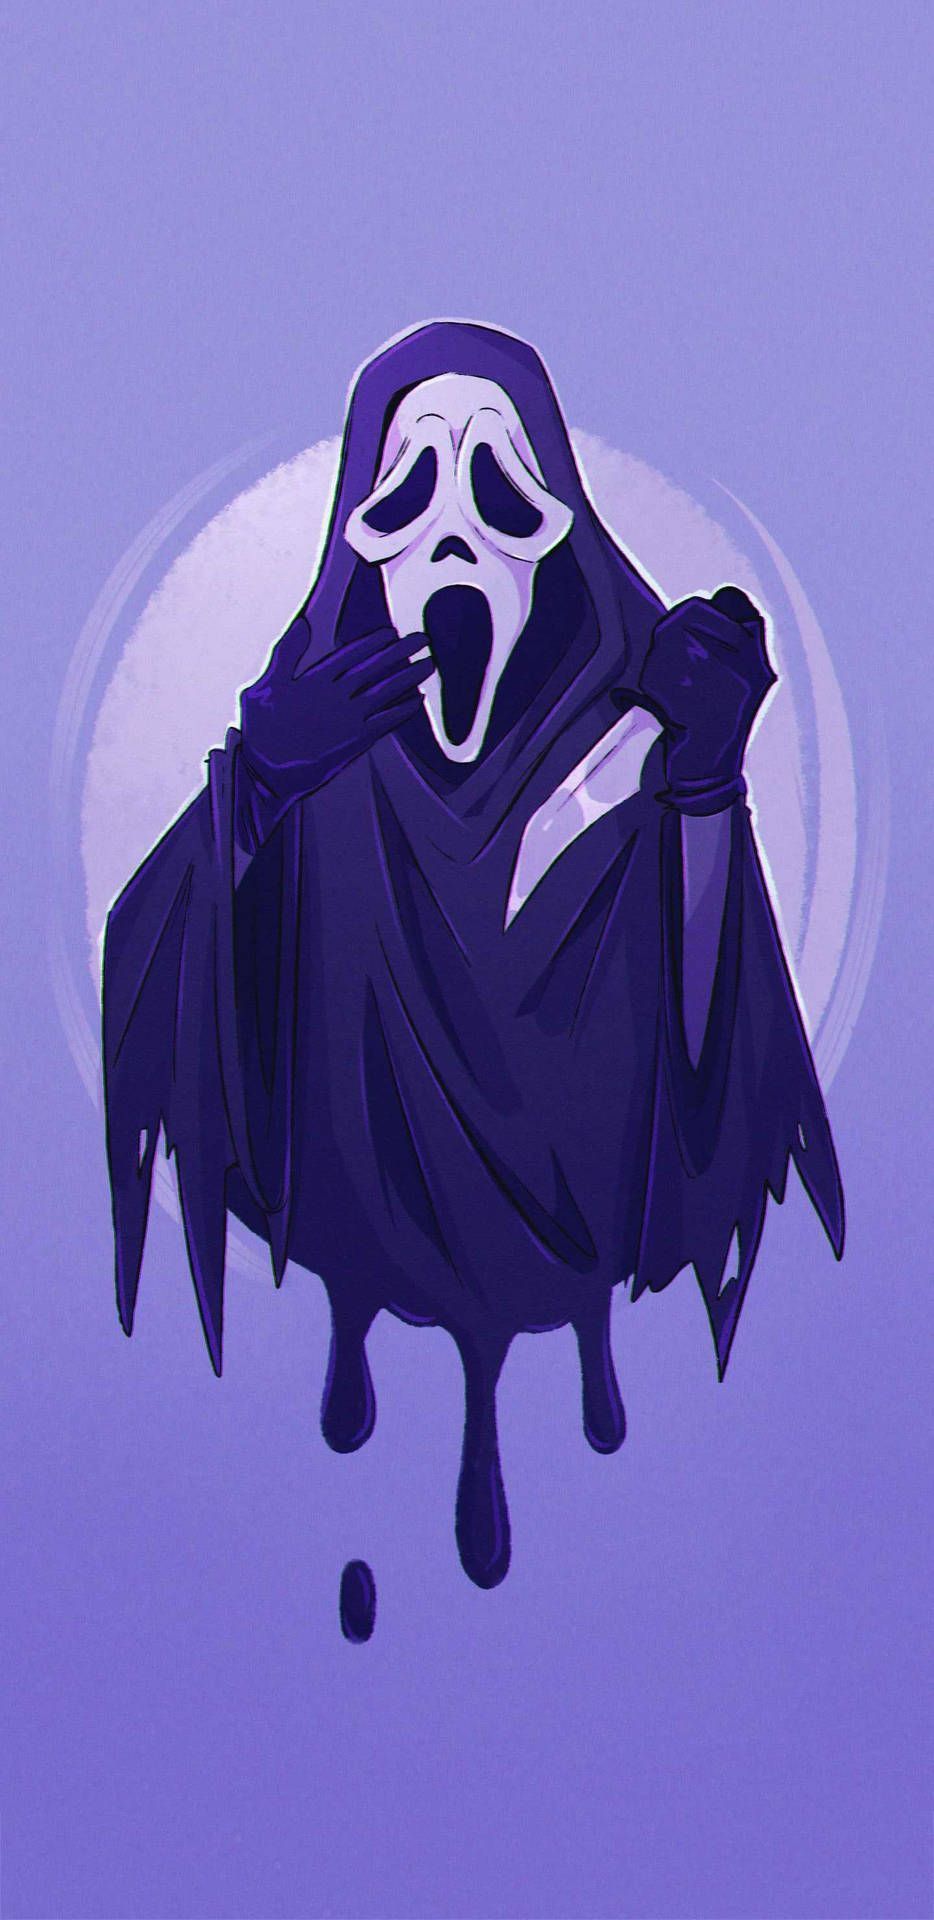 Free Ghostface Wallpaper Downloads, Ghostface Wallpaper for FREE